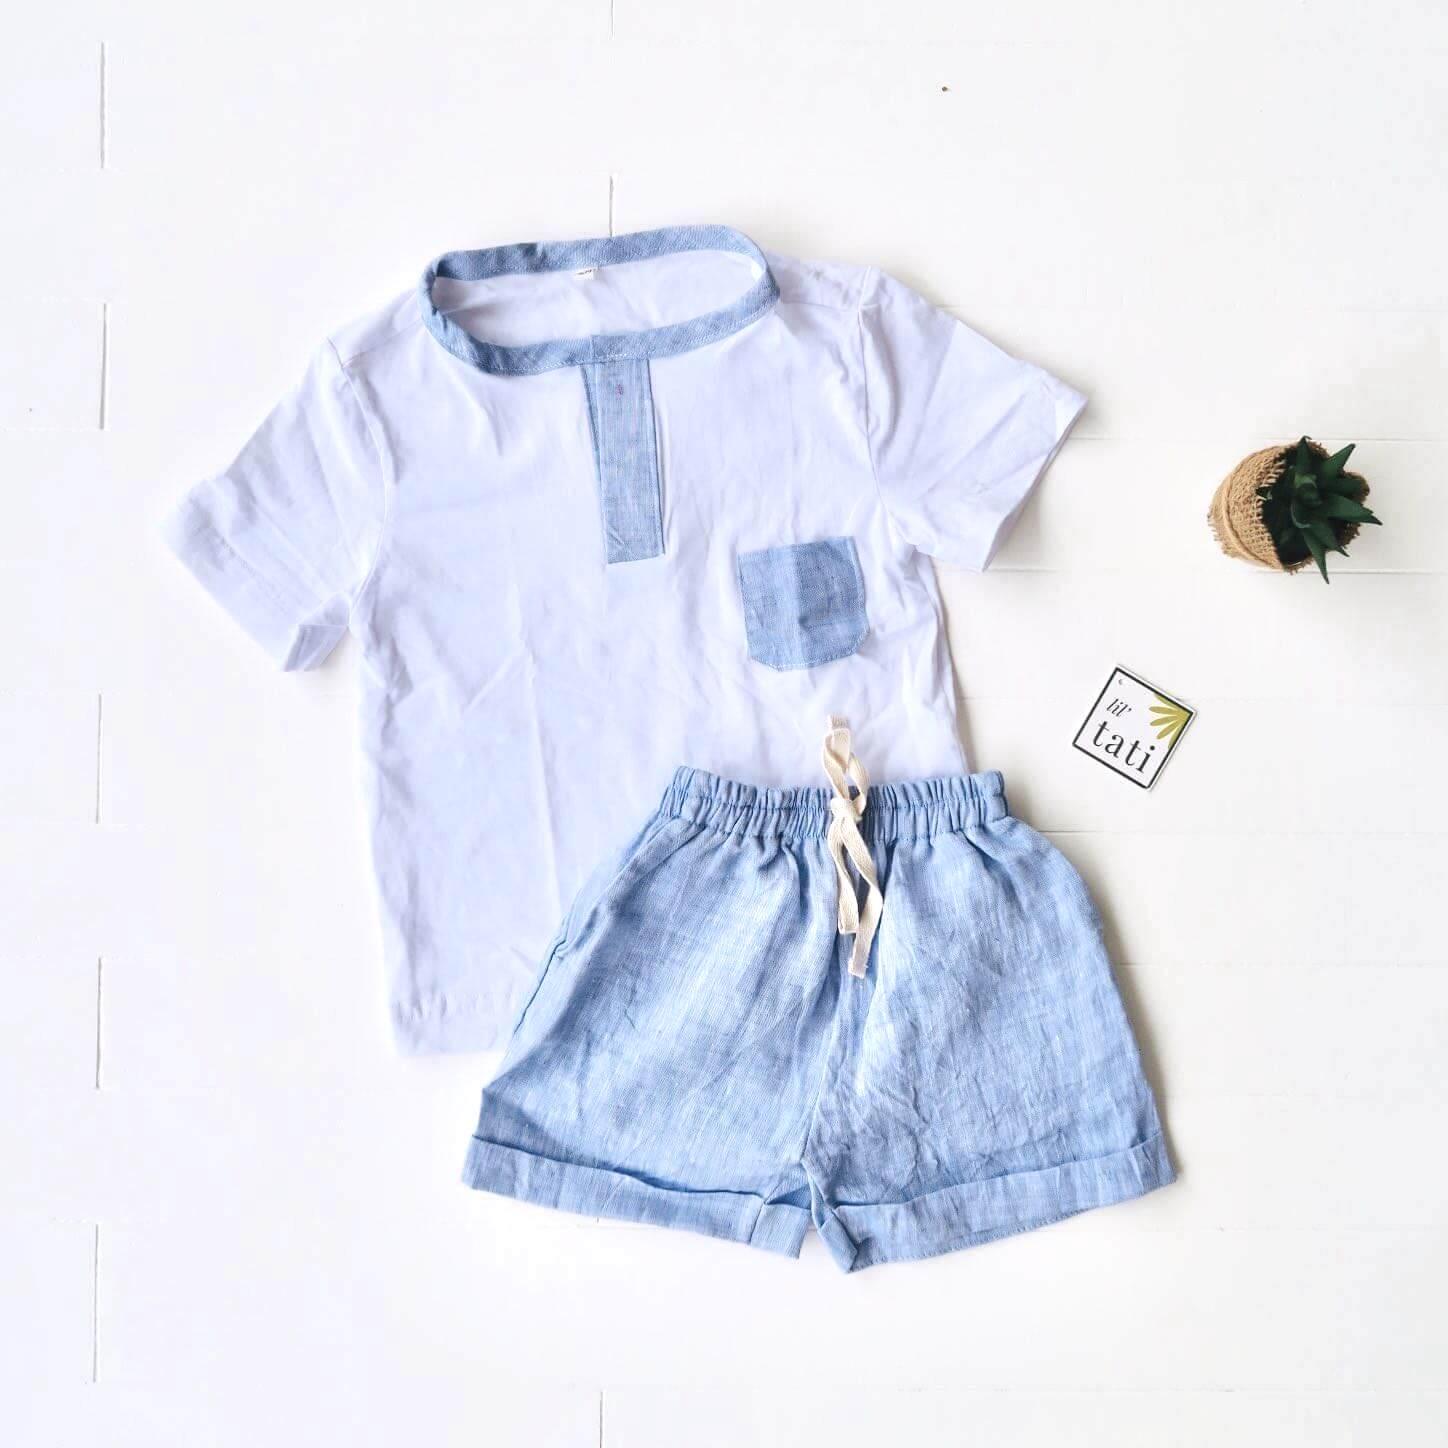 Caper Top & Shorts in Blue Linen and White Stretch - Lil' Tati